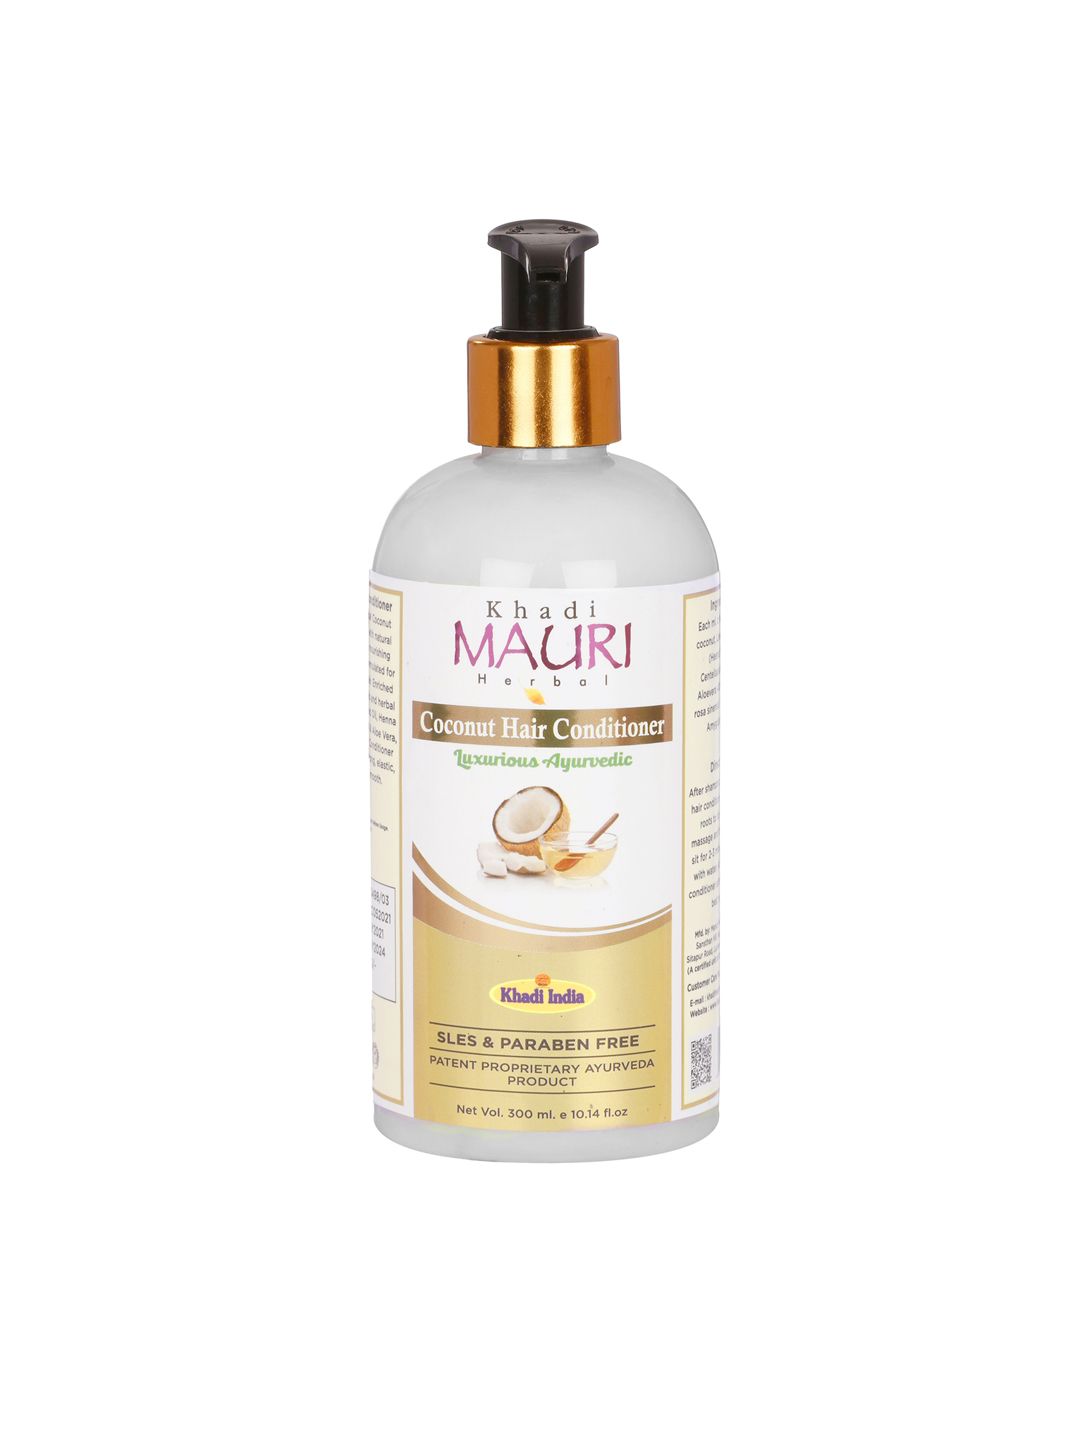 Khadi Mauri Herbal Coconut Hair Conditioner - 300 ml Price in India